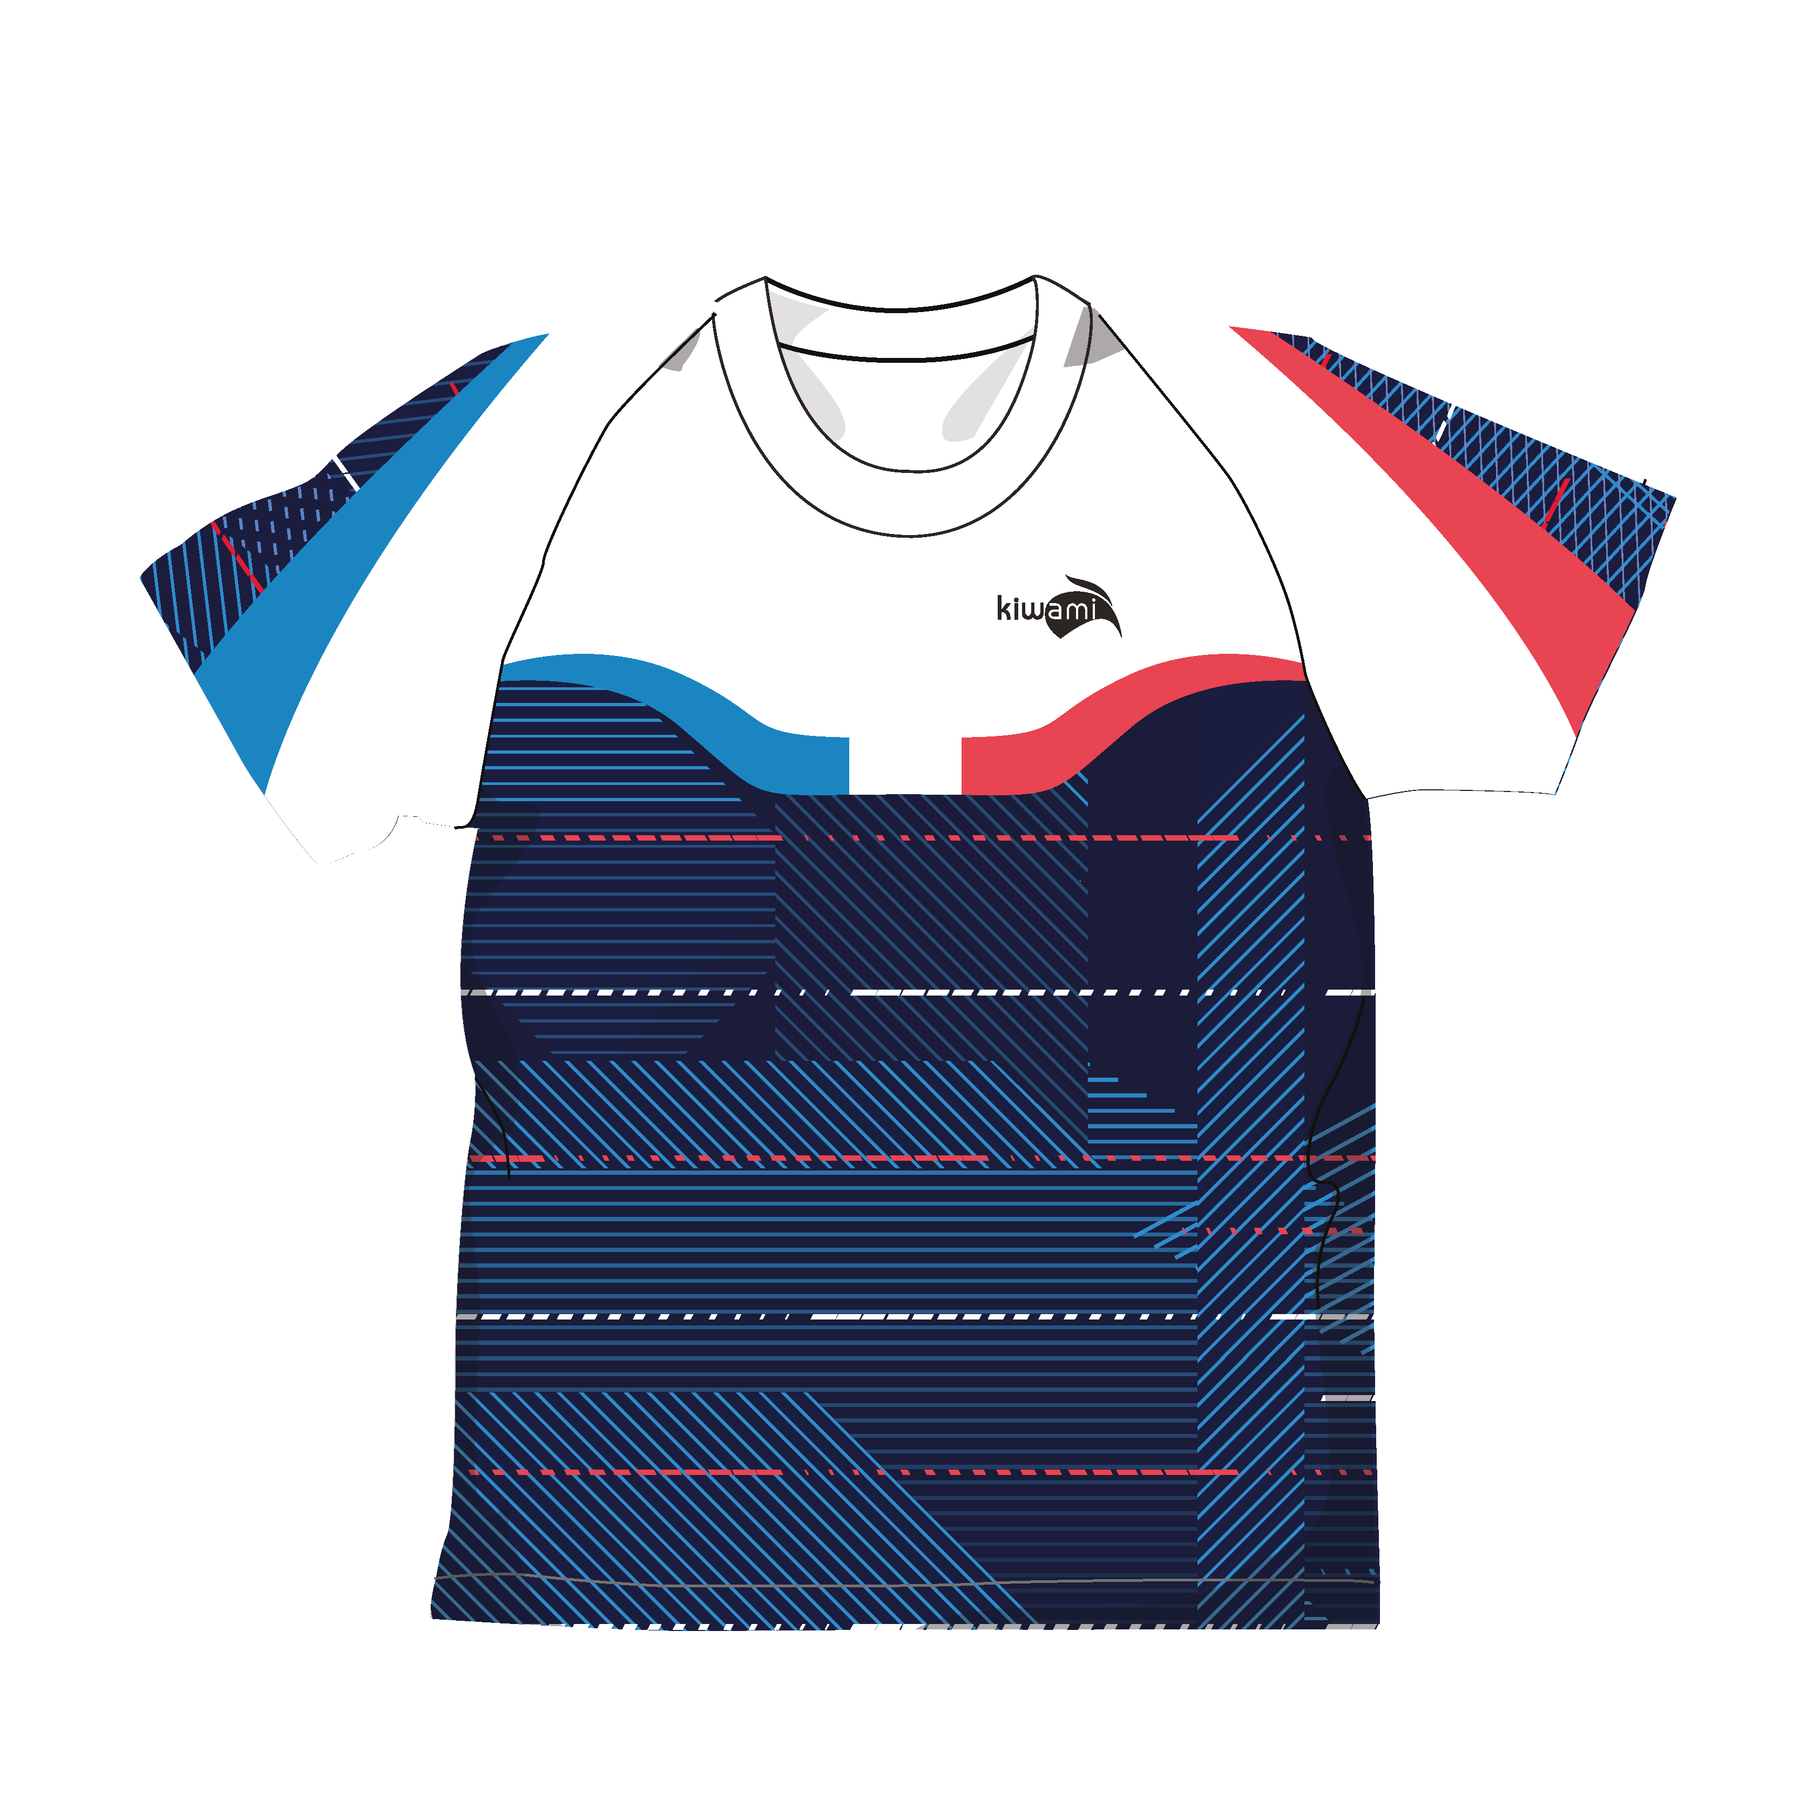 Tee-shirt running France Kiwami triathlon